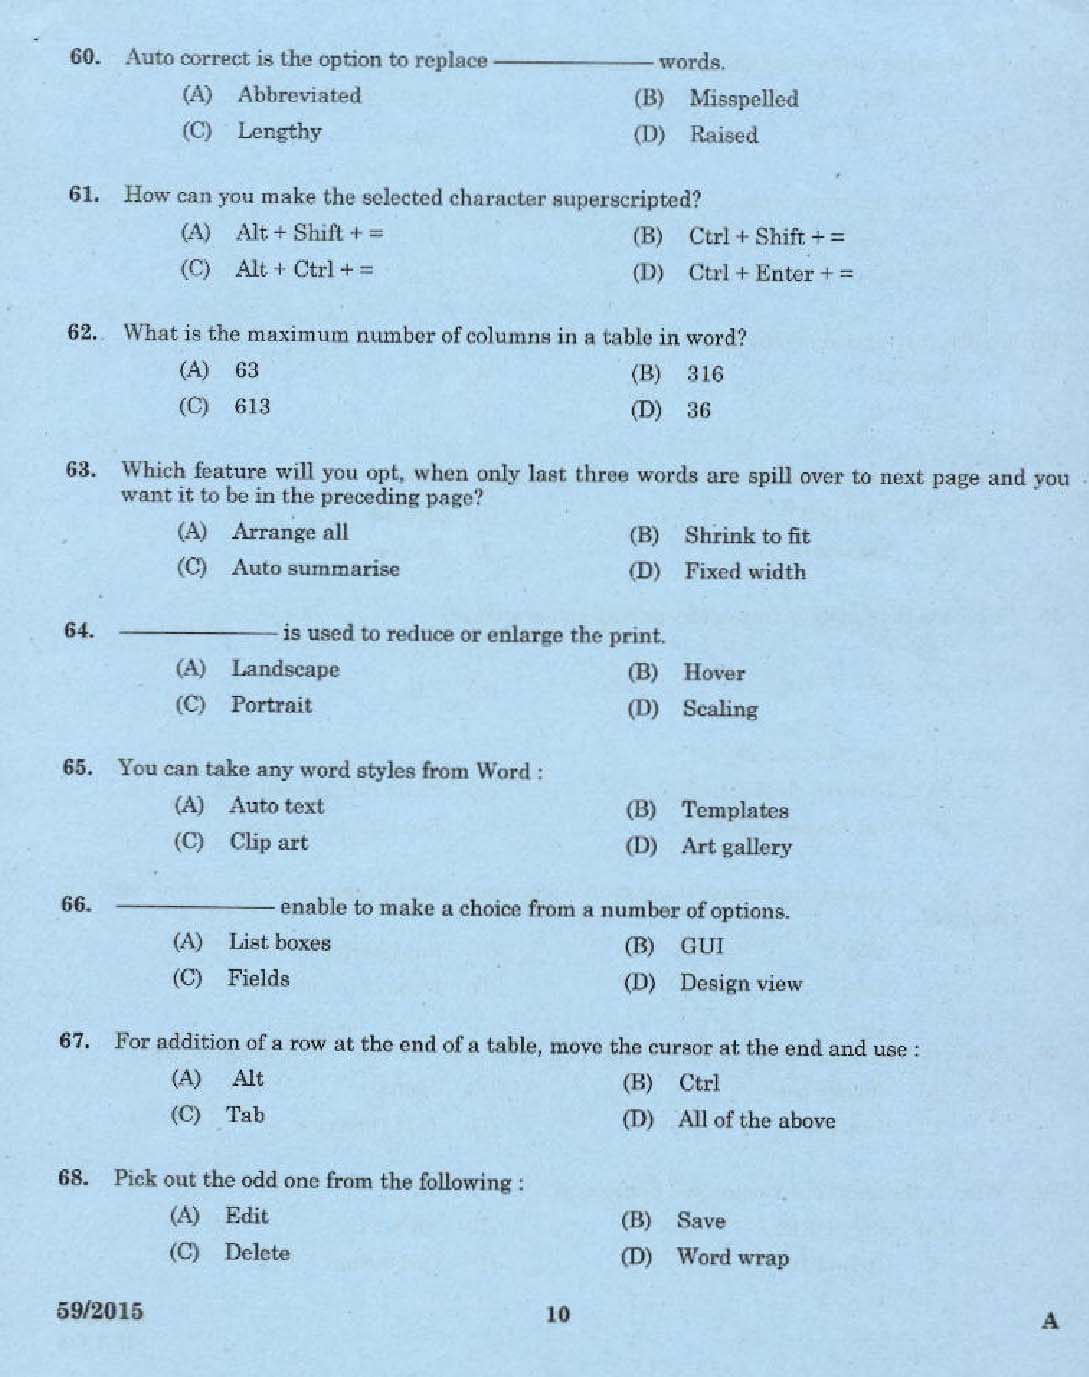 Kerala PSC Malayalam Stenographer Exam 2015 Question Paper Code 592015 8